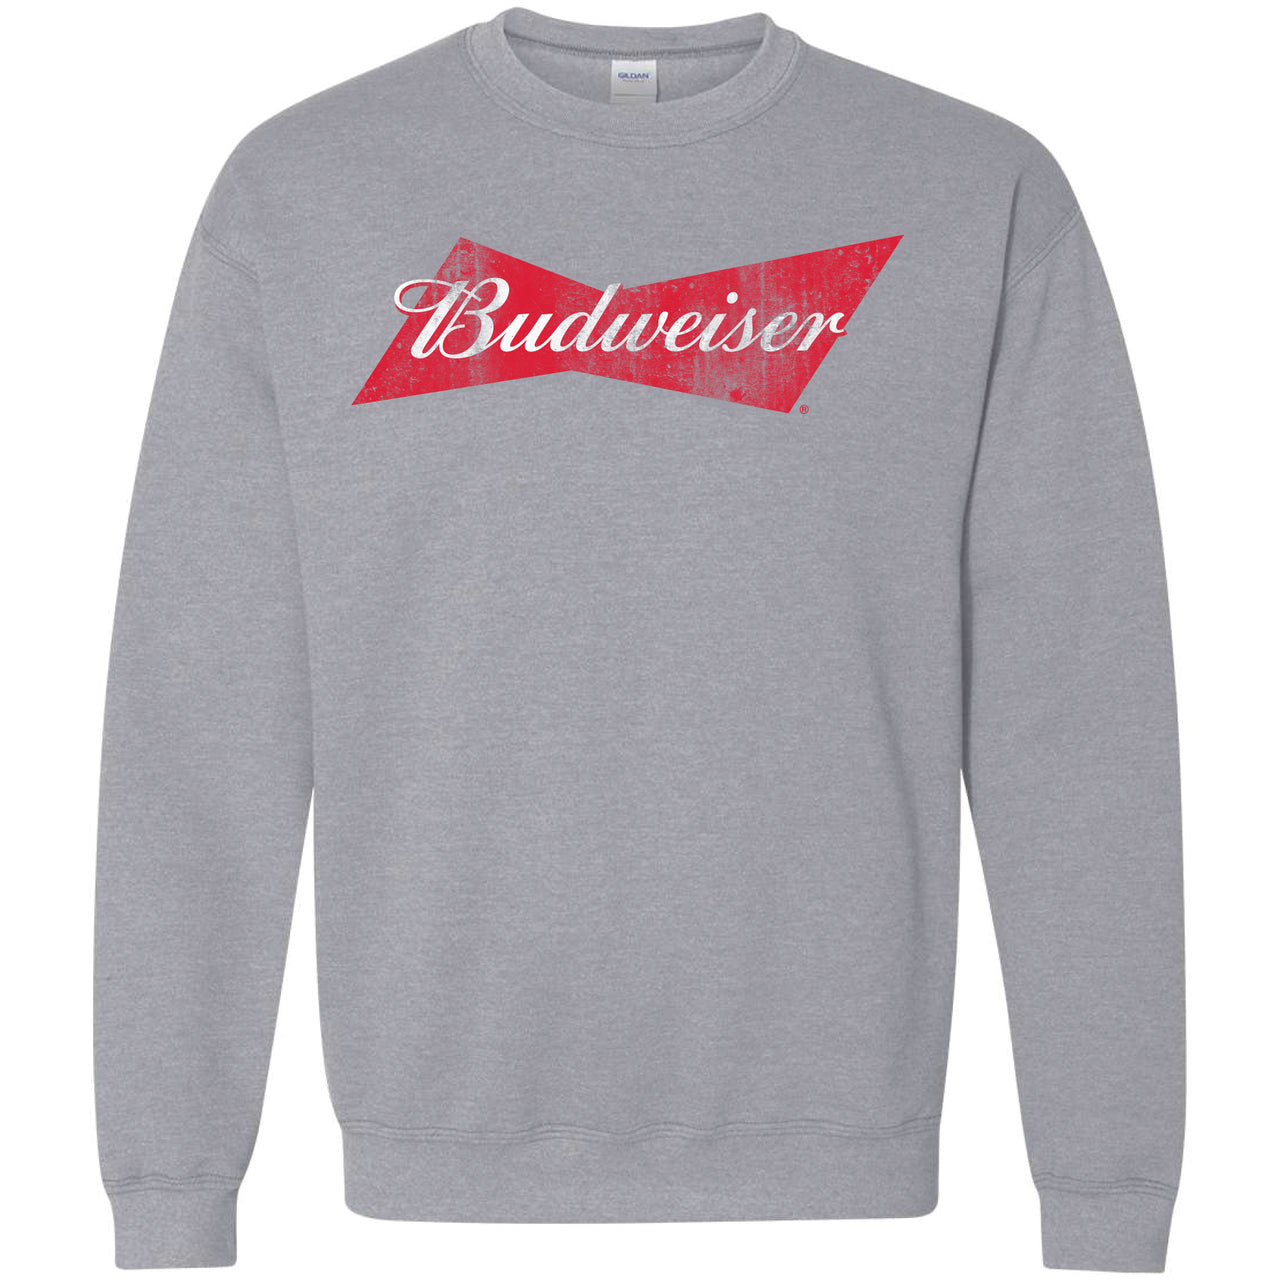 Budweiser Bow Tie Logo Crew Sweatshirt